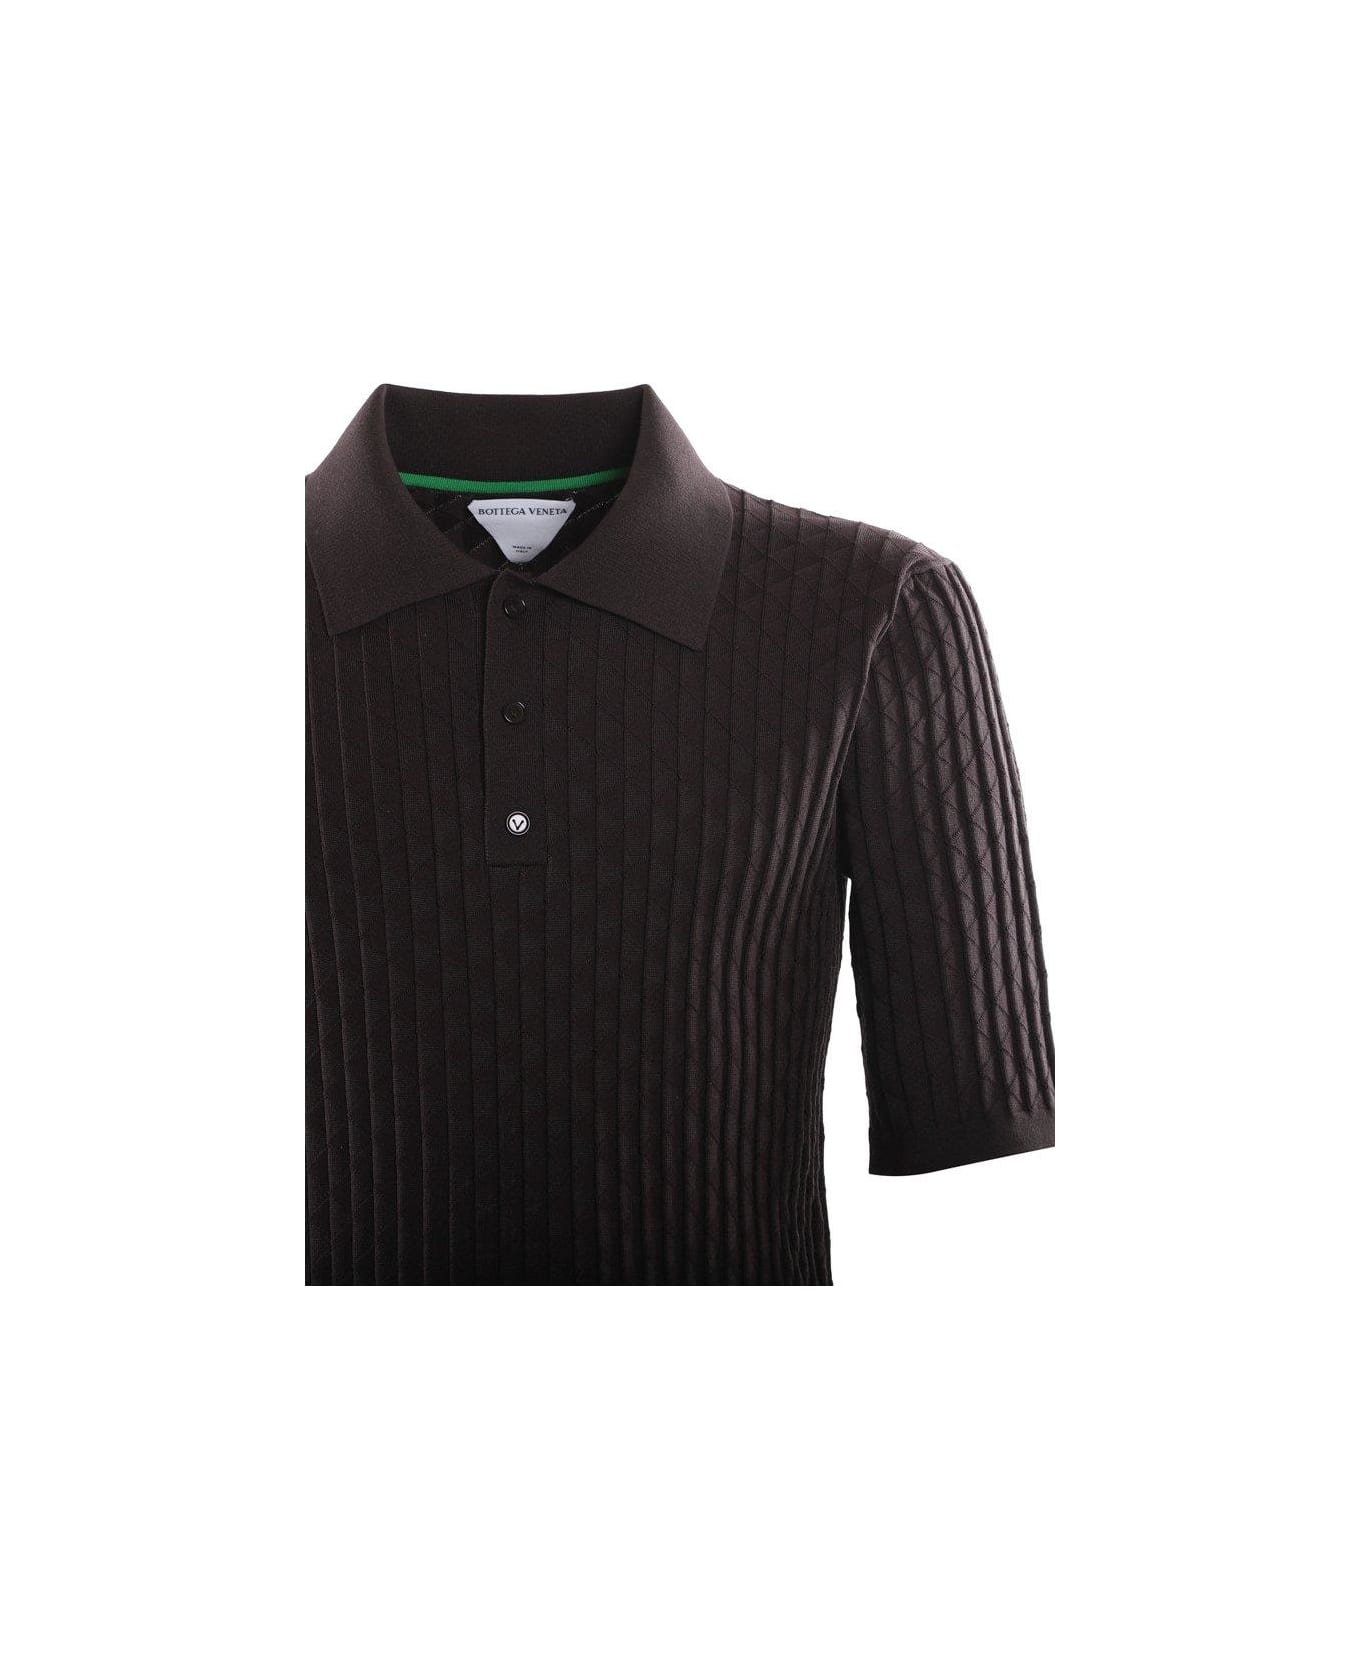 Bottega Veneta Buttoned Polo Shirt - BROWN